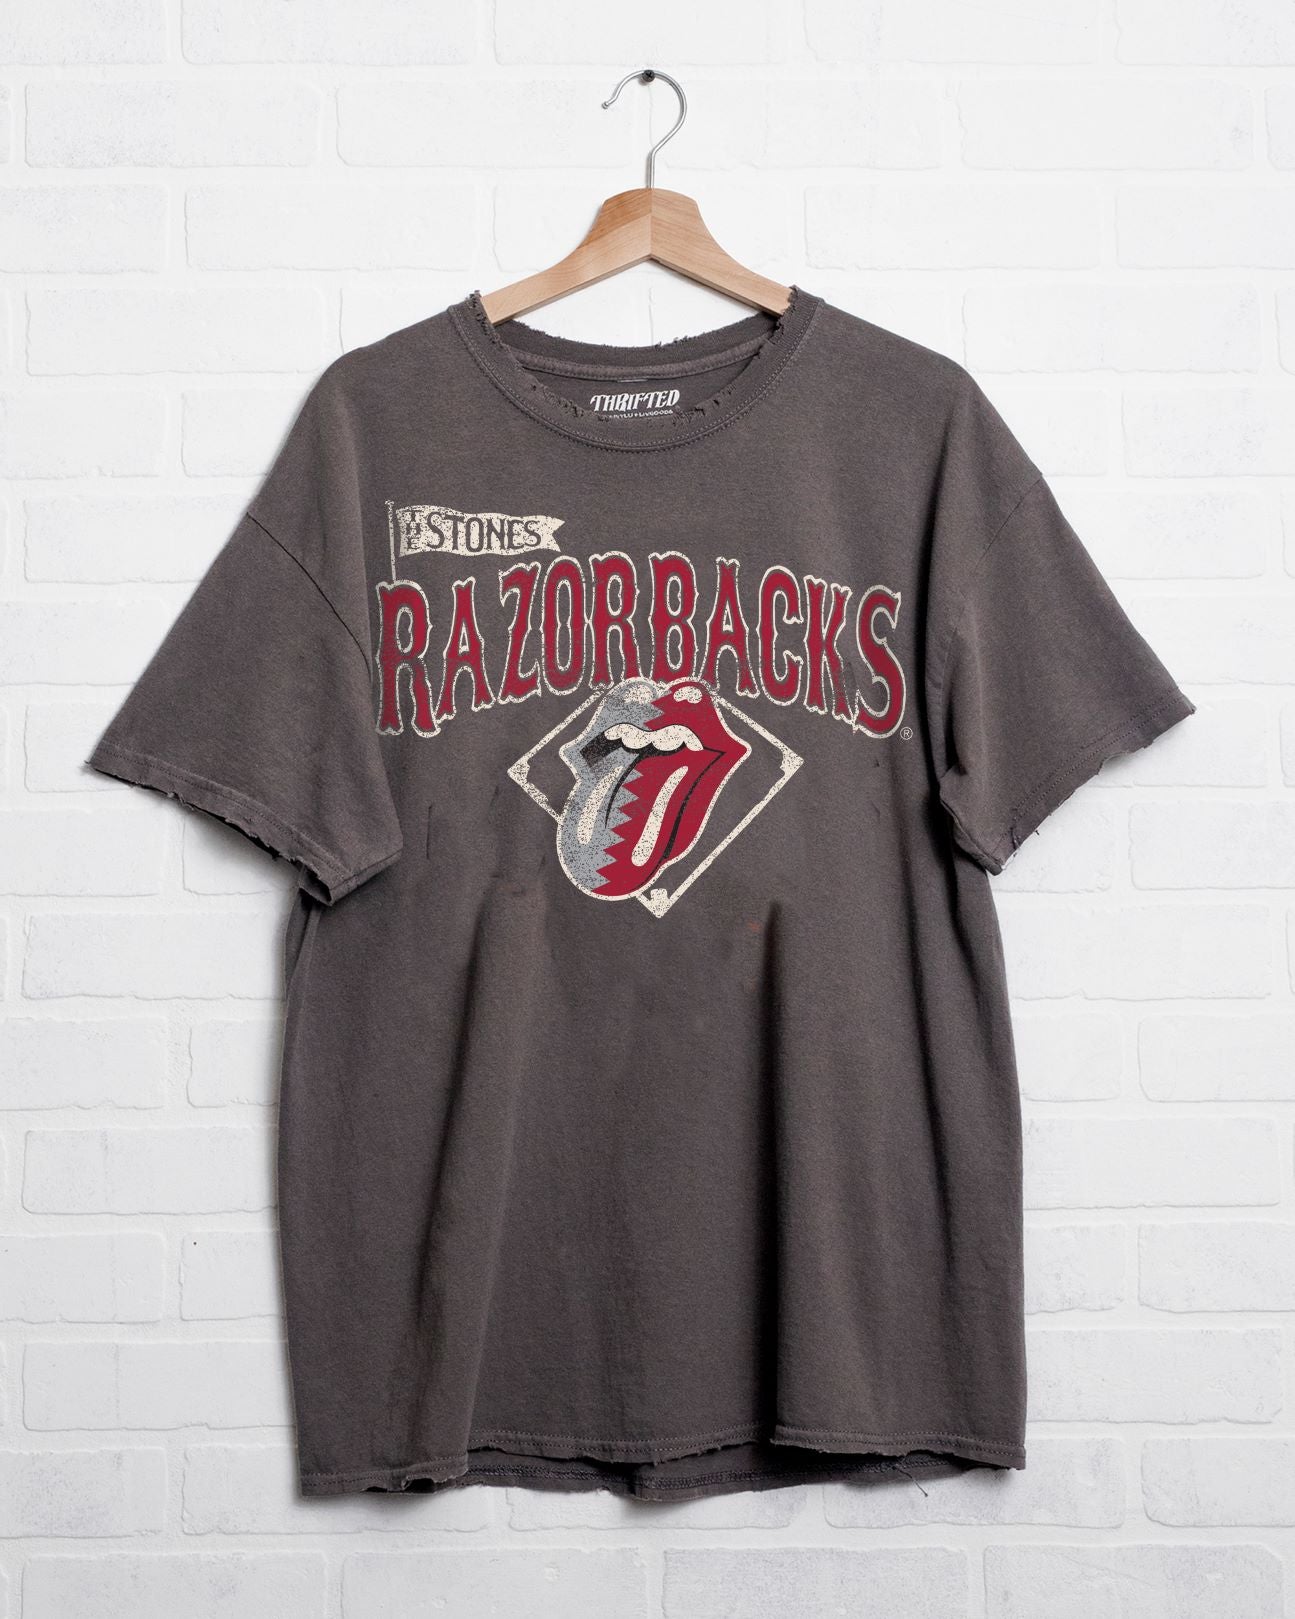 Rolling Stones Razorbacks Baseball Diamond Off Black Thrifted Tee - shoplivylu